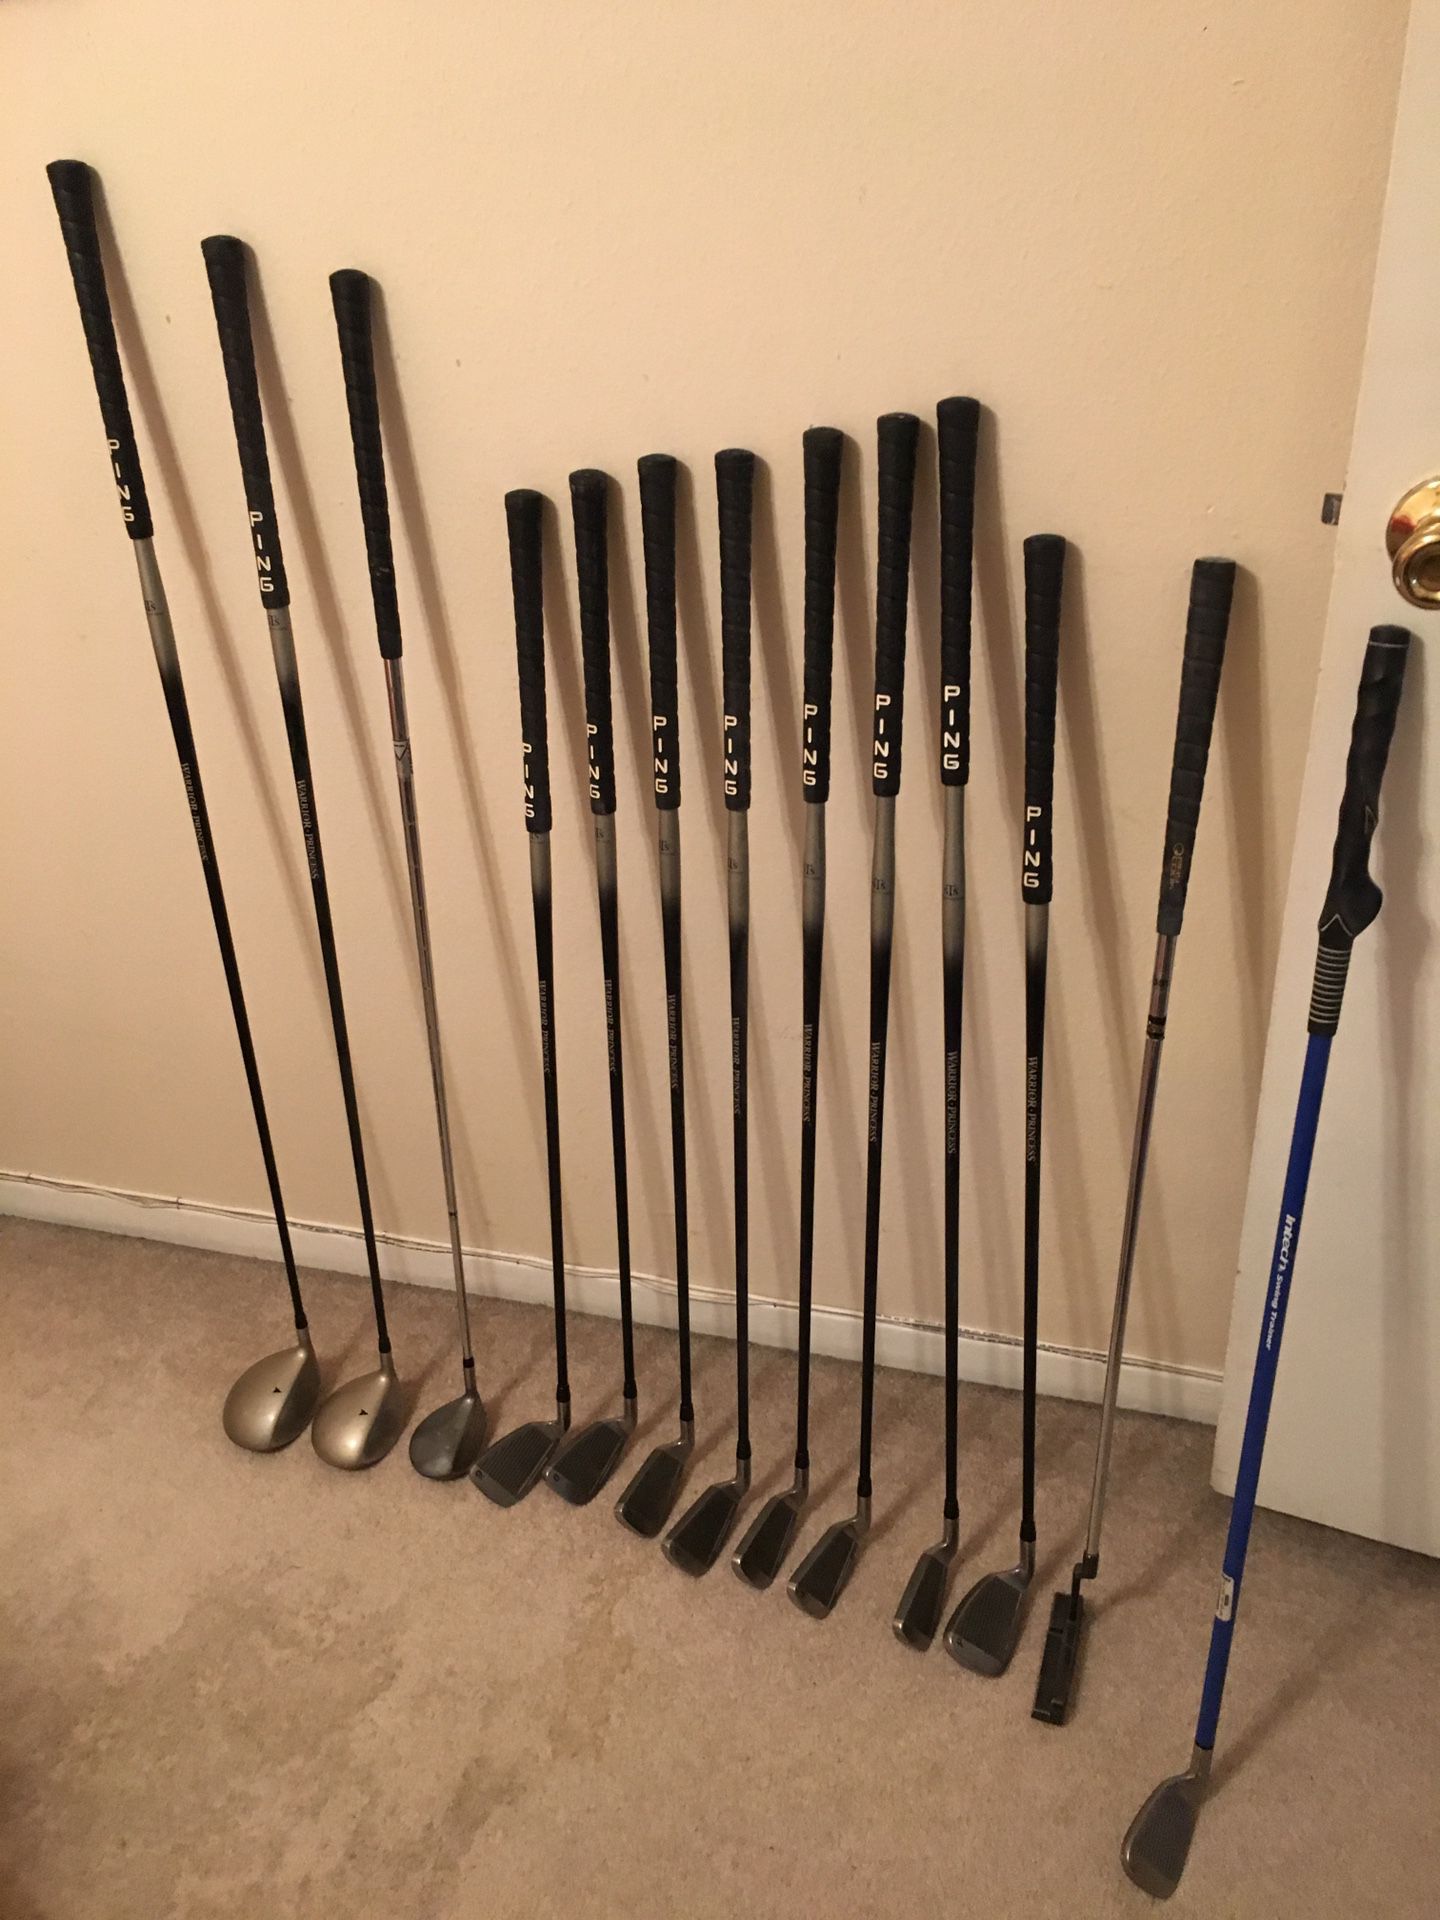 Generic golf clubs